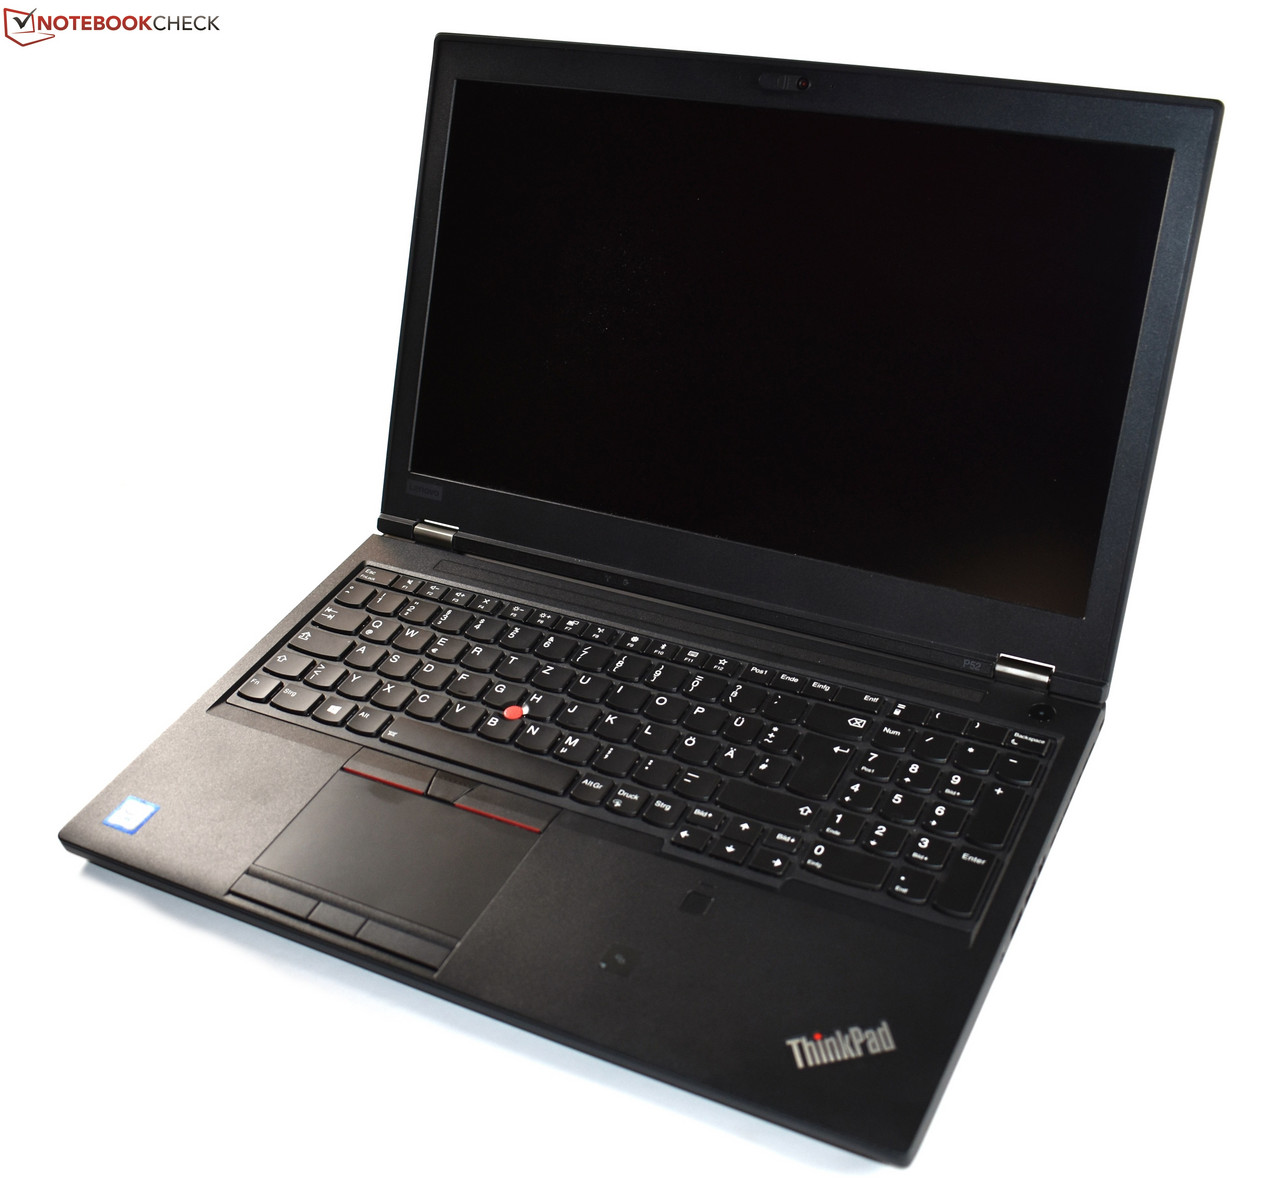 Lenovo ThinkPad P52 (i7, P1000, FHD) Workstation Review - NotebookCheck.net Reviews